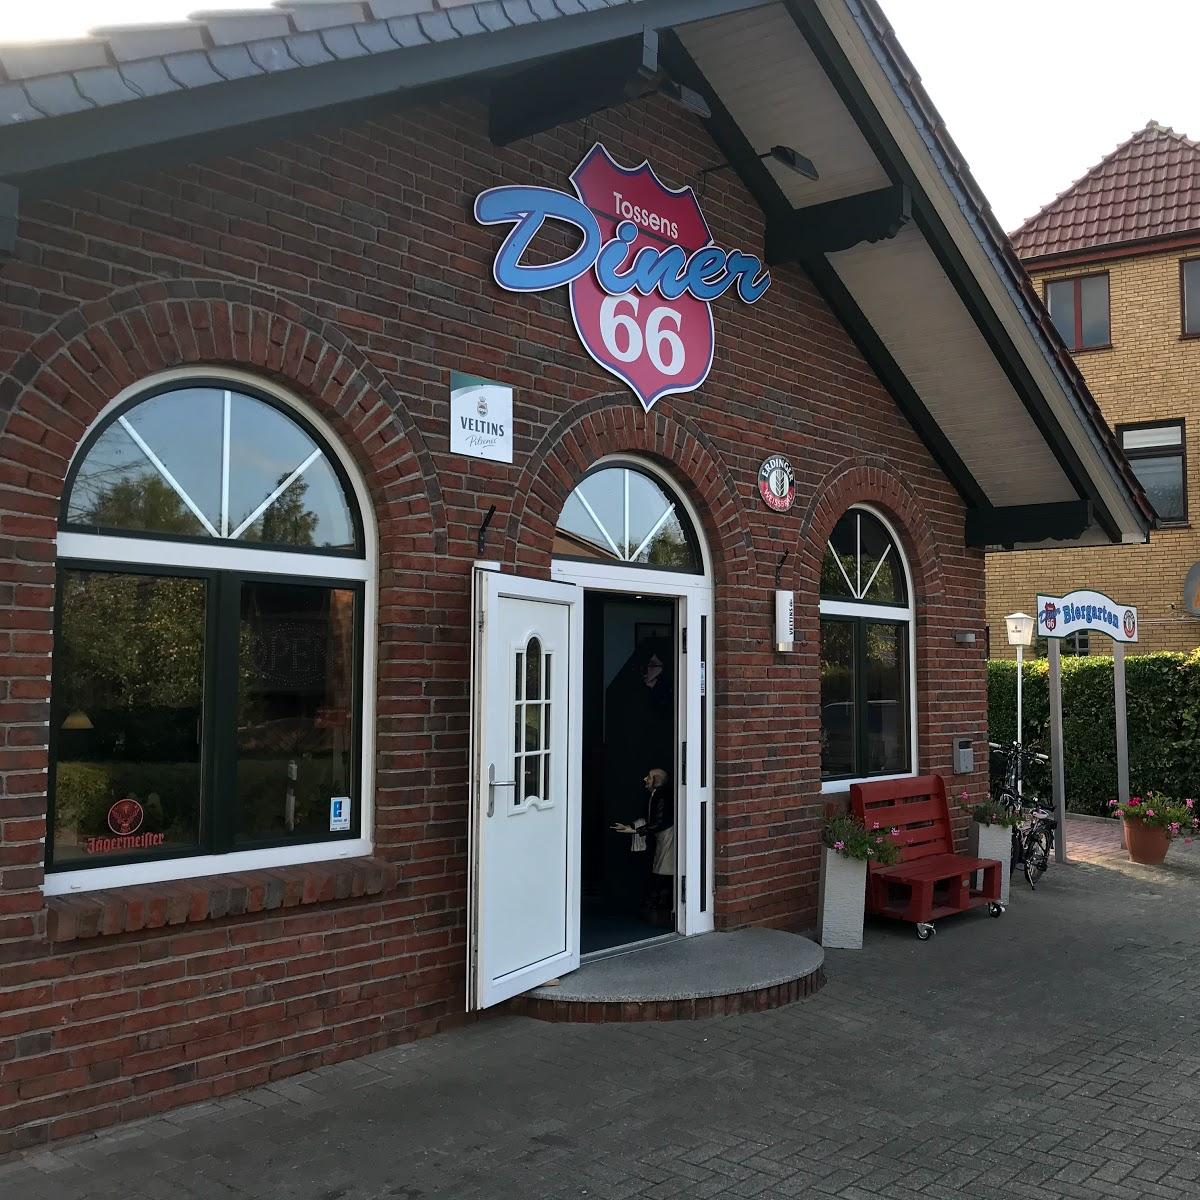 Restaurant "Diner Inh. Susanne Trinks" in  Butjadingen